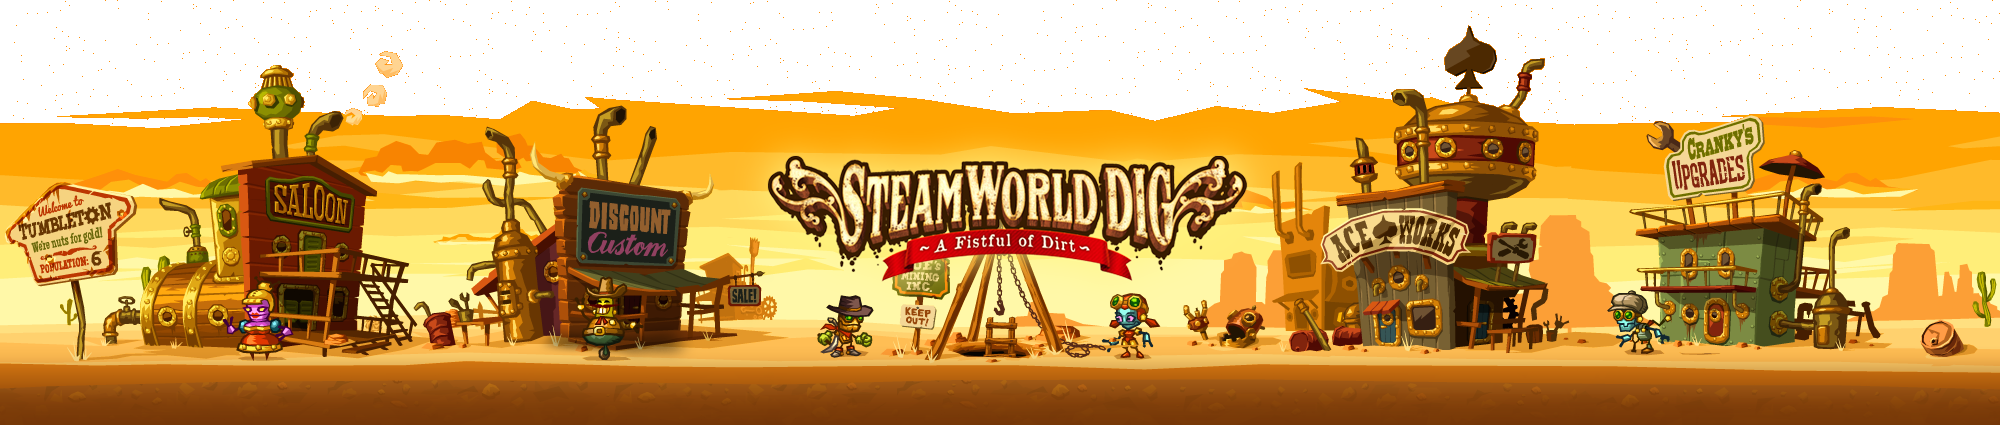 Banner SteamWorld Dig